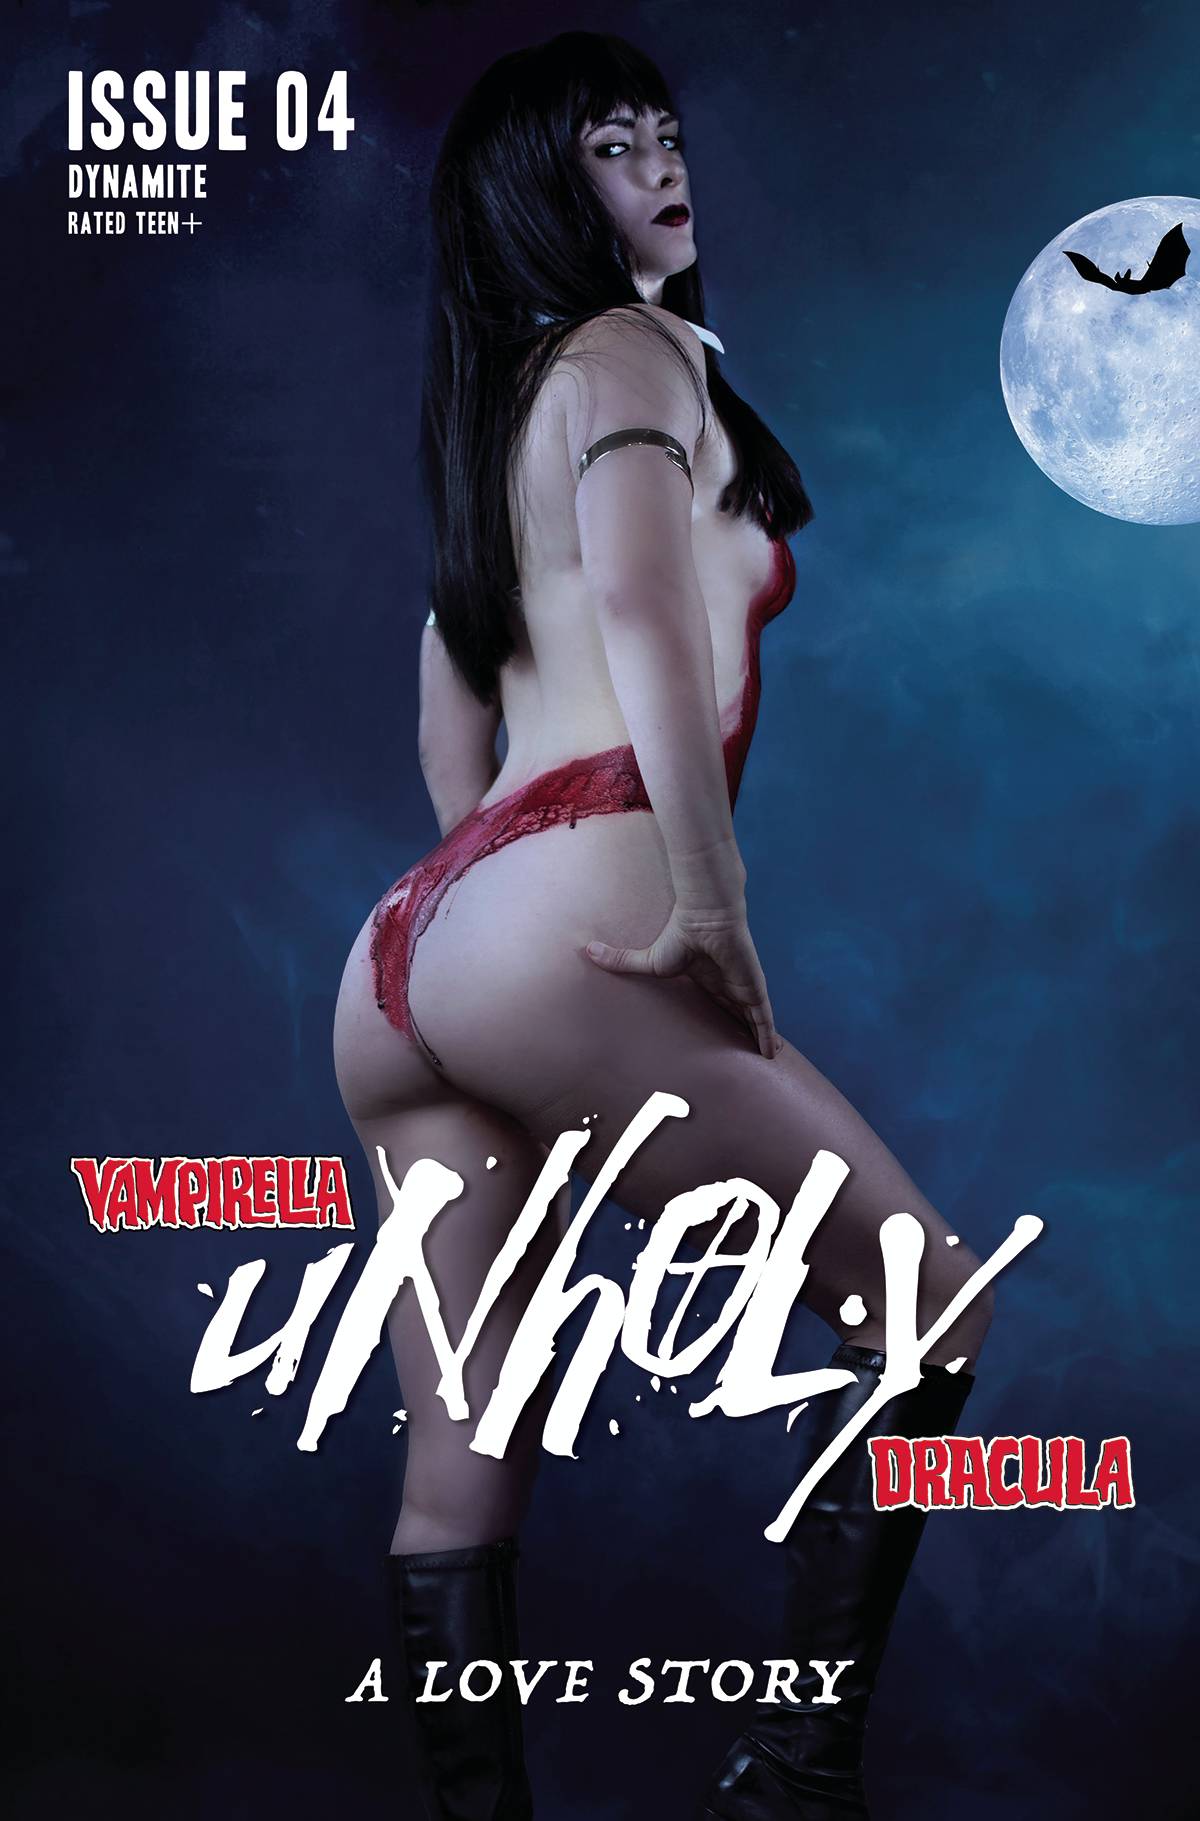 VAMPIRELLA DRACULA UNHOLY #4